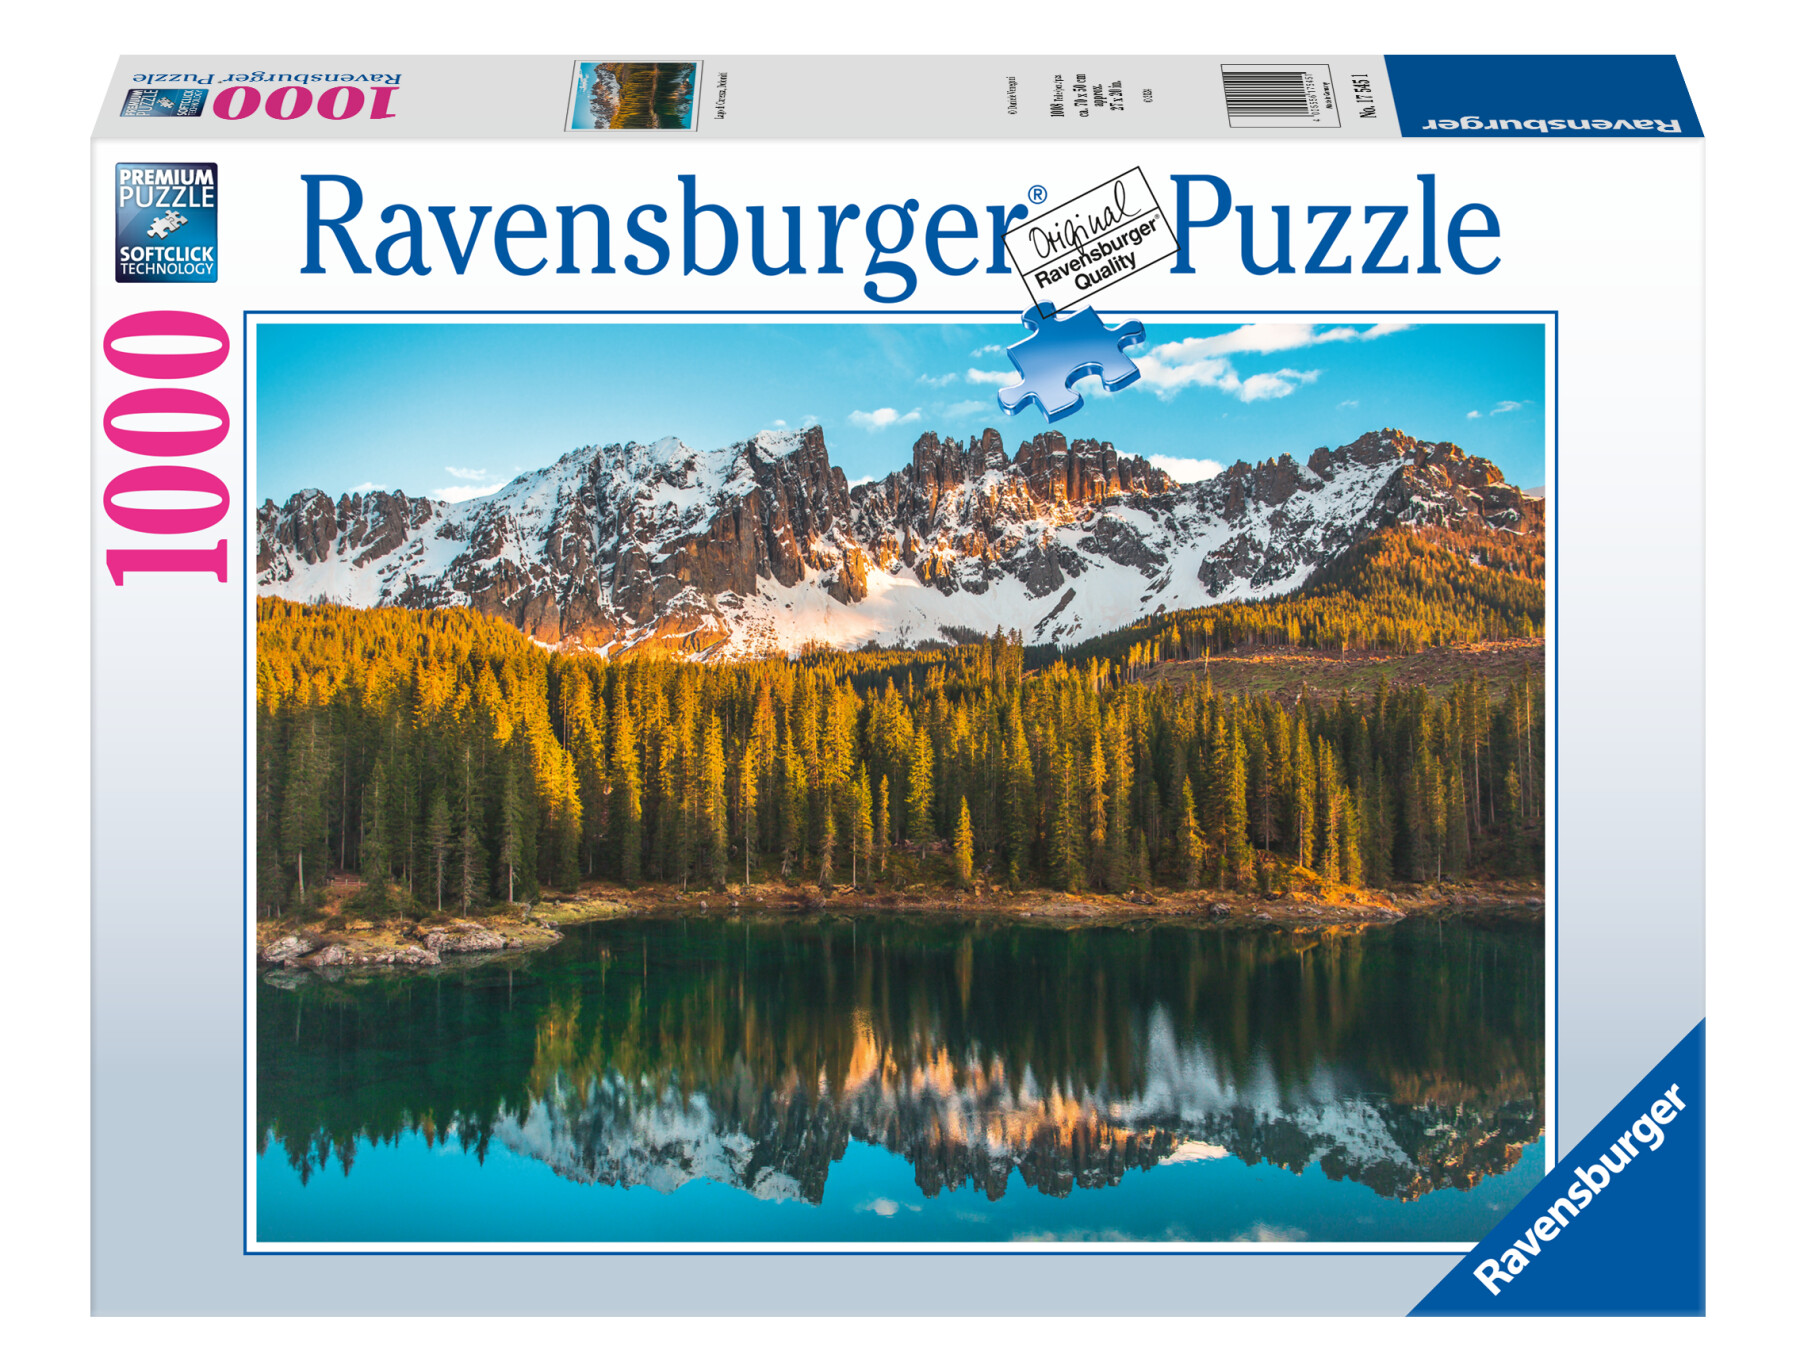 Ravensburger - puzzle lago di carezza, 1000 pezzi, puzzle adulti - RAVENSBURGER